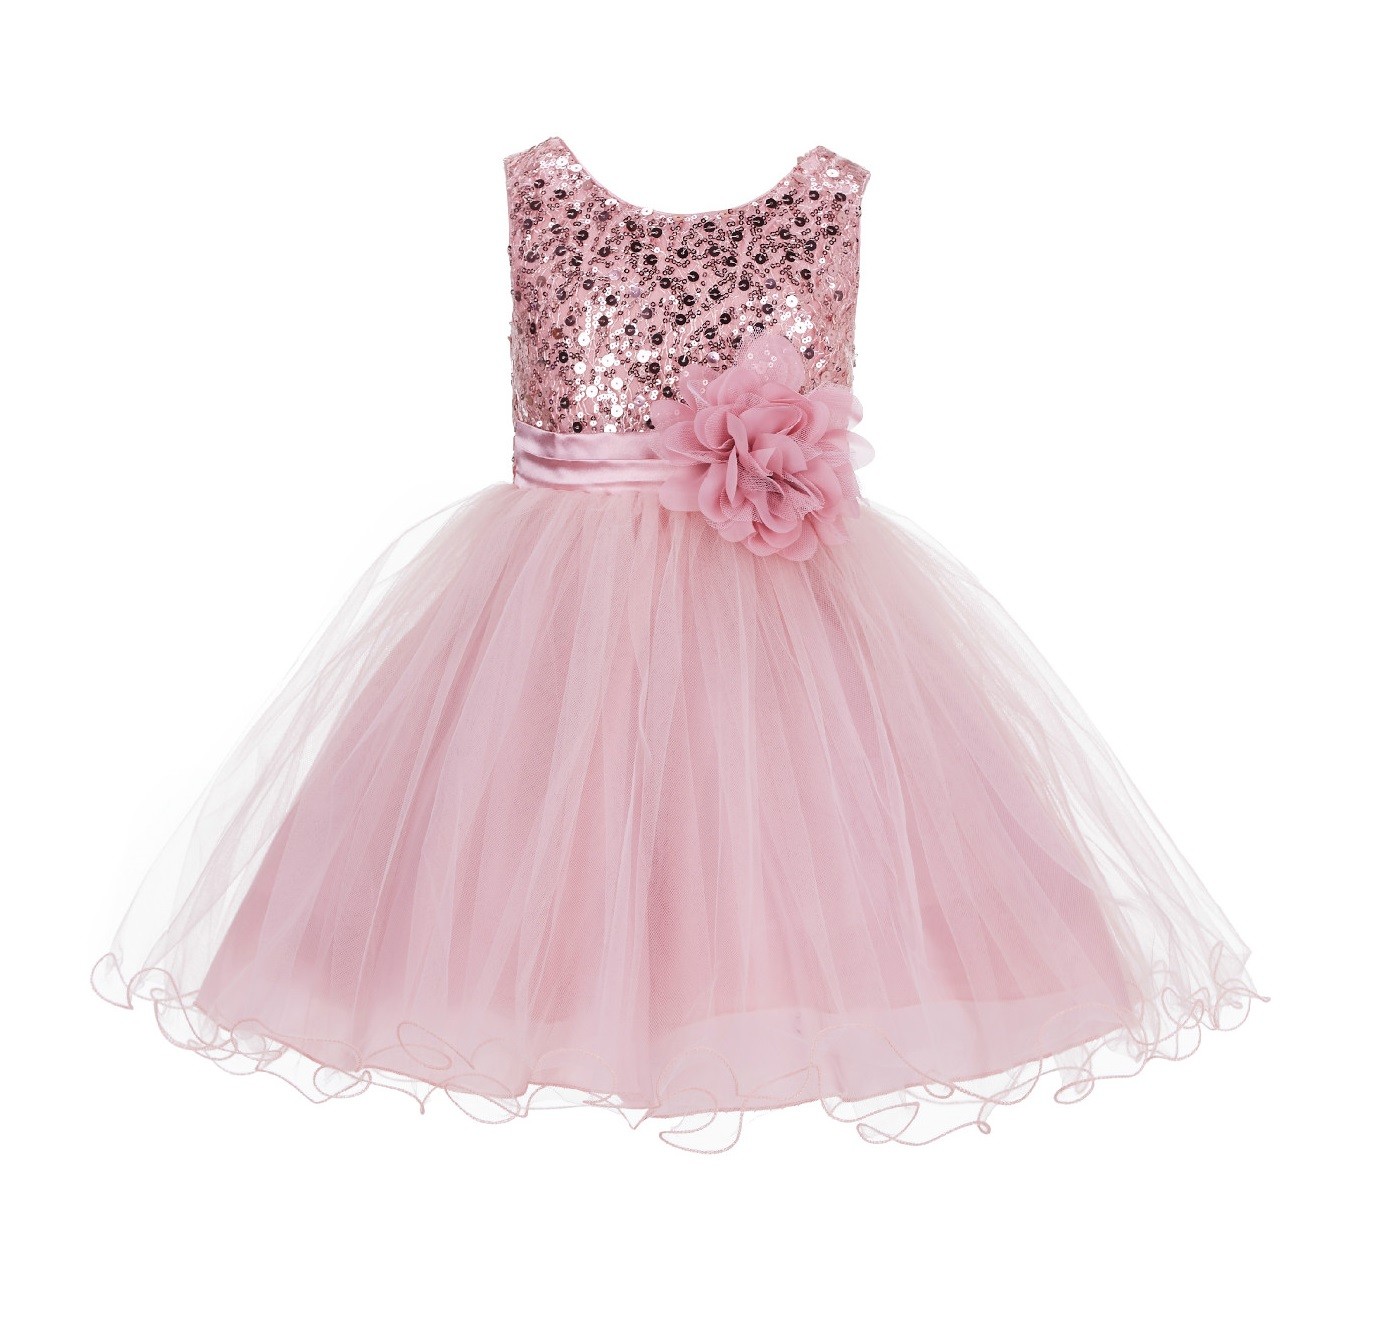 Dusty Rose Glitter Sequin Tulle Flower Girl Dress Pretty Princess B-011